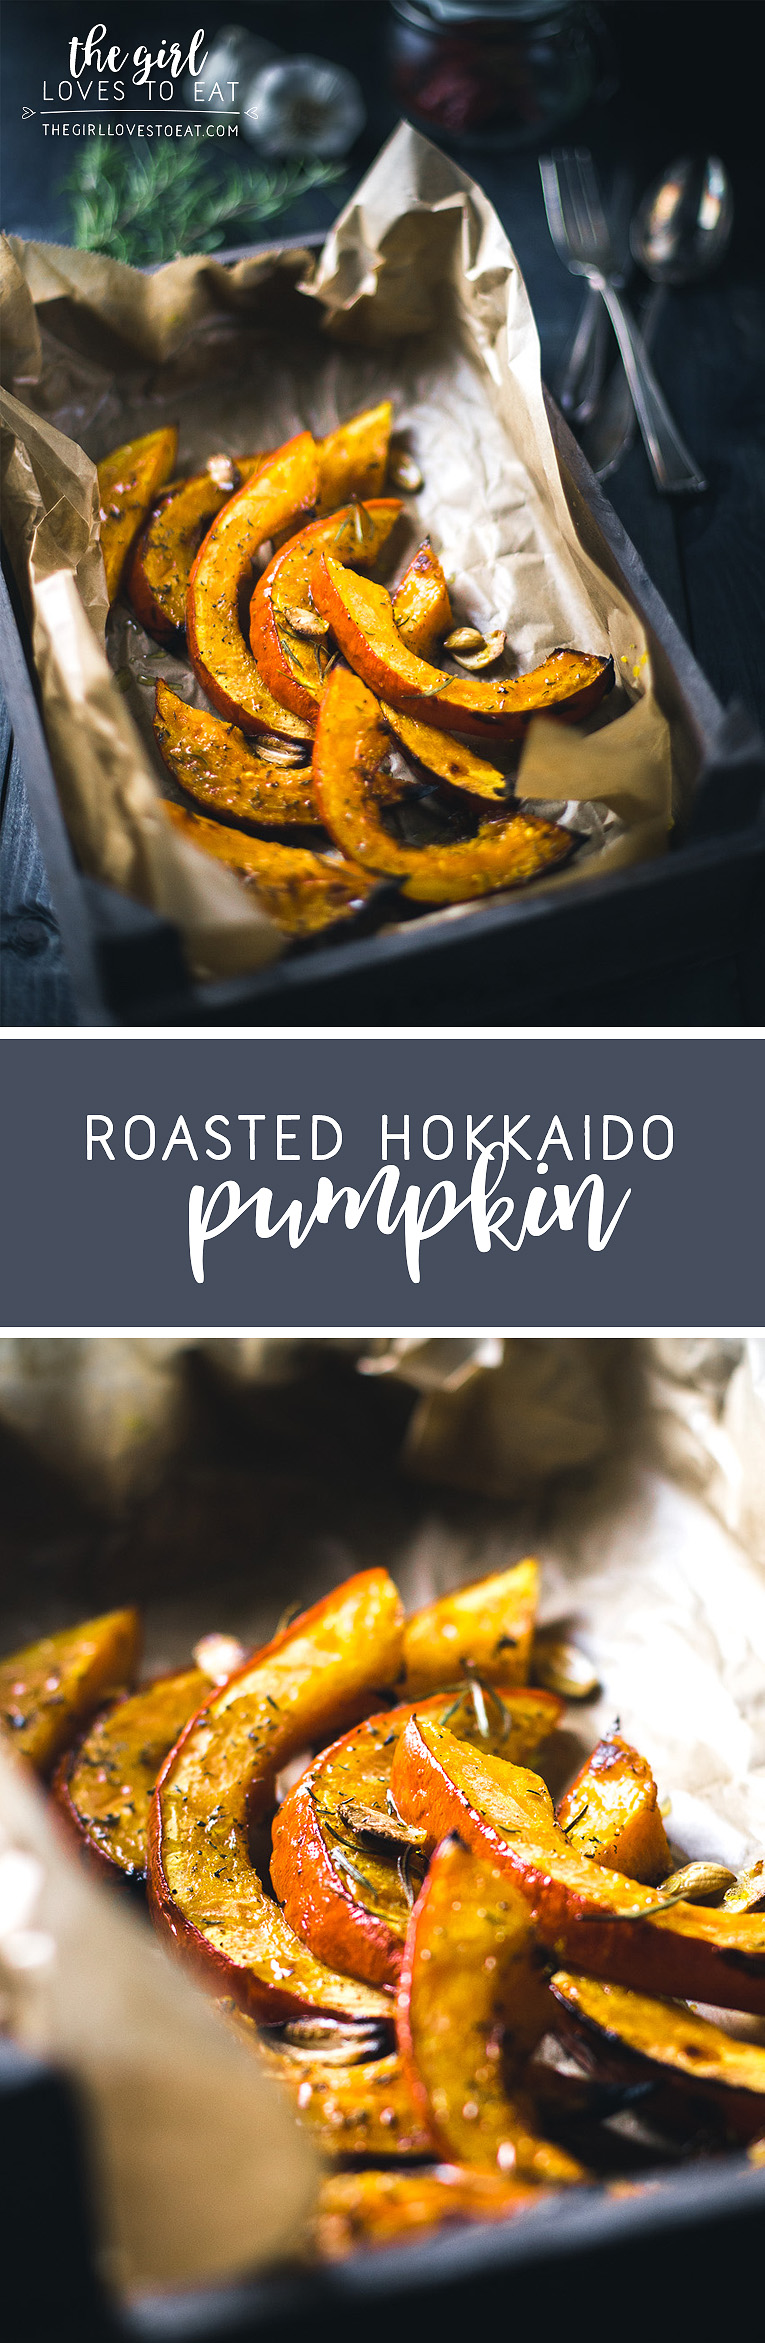 Roasted Hokkaido Pumpkin { thegirllovestoeat.com }